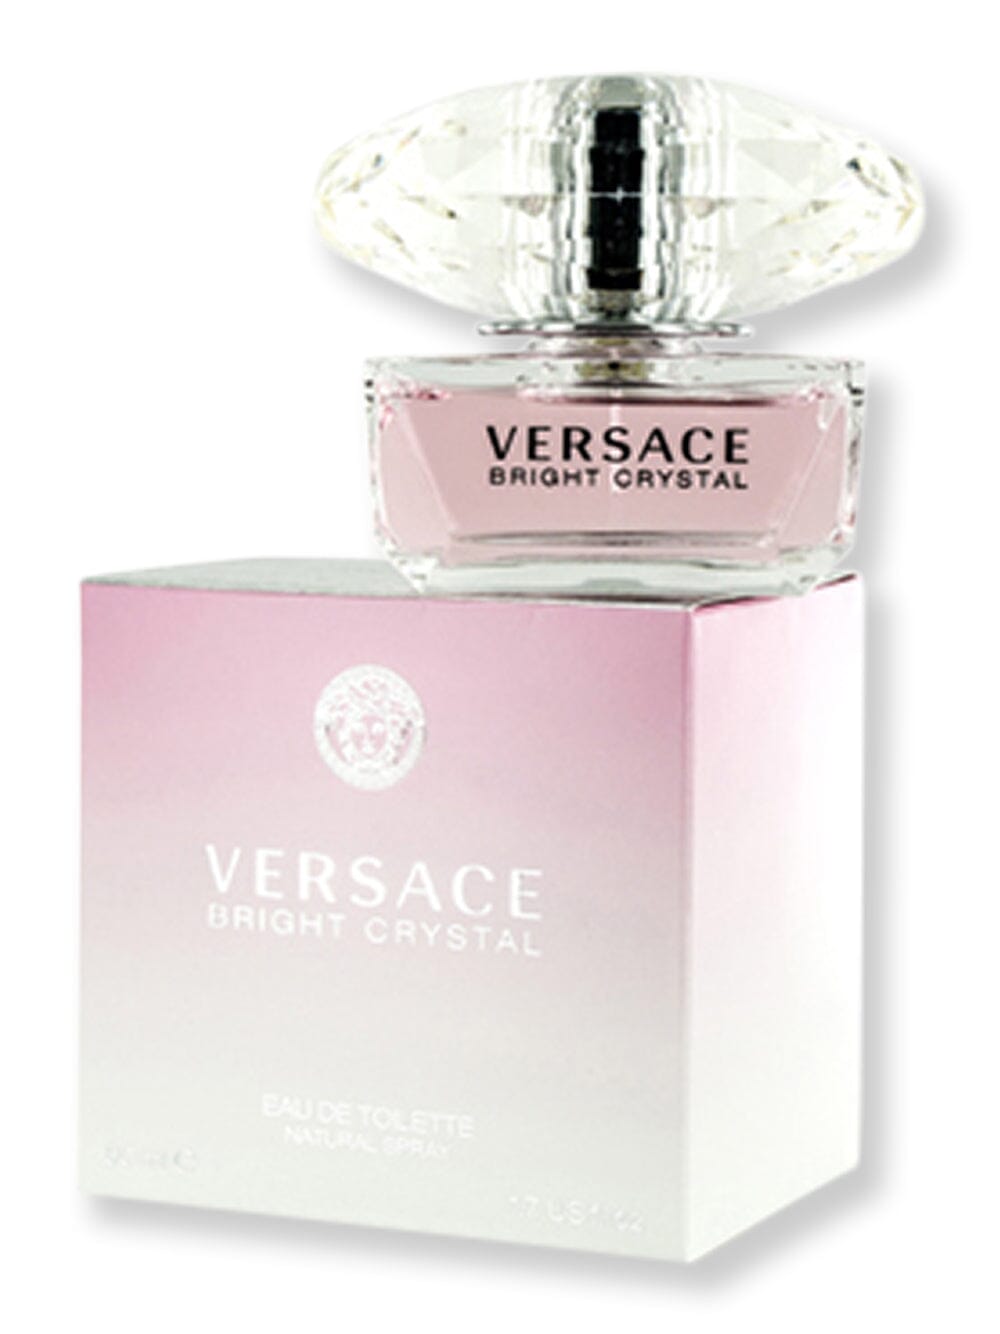 Versace Versace Bright Crystal EDT Spray 1.7 oz Perfume 